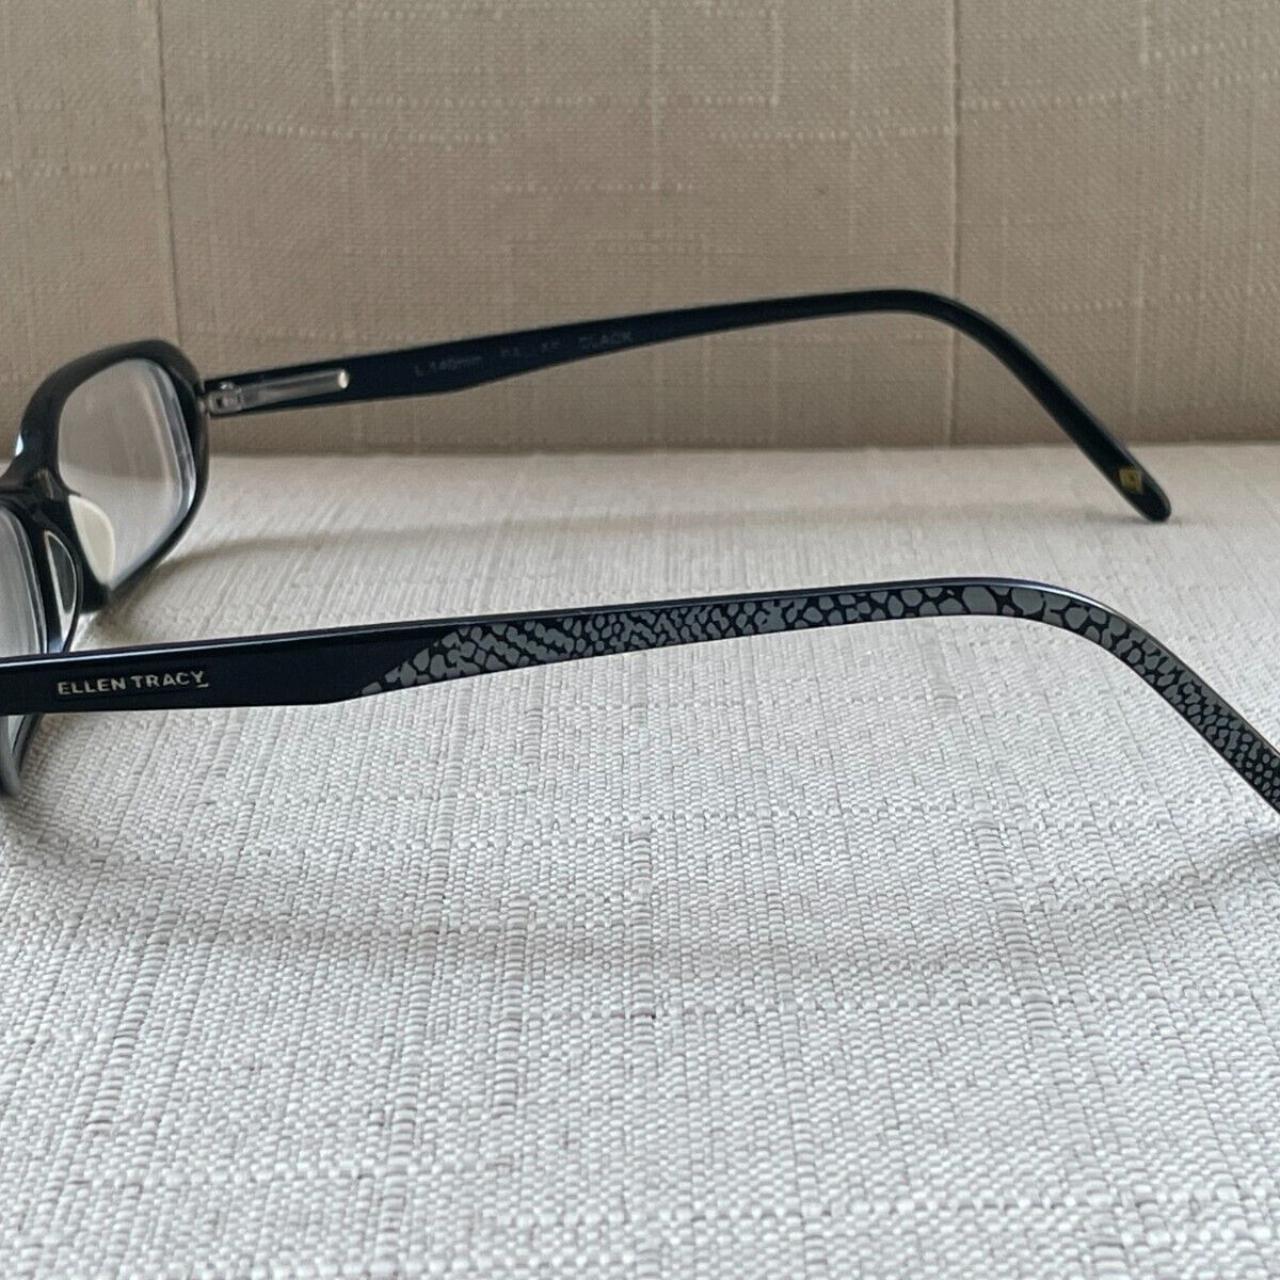 ellen tracy sunglasses D33 161-1 Made in Italy | eBay